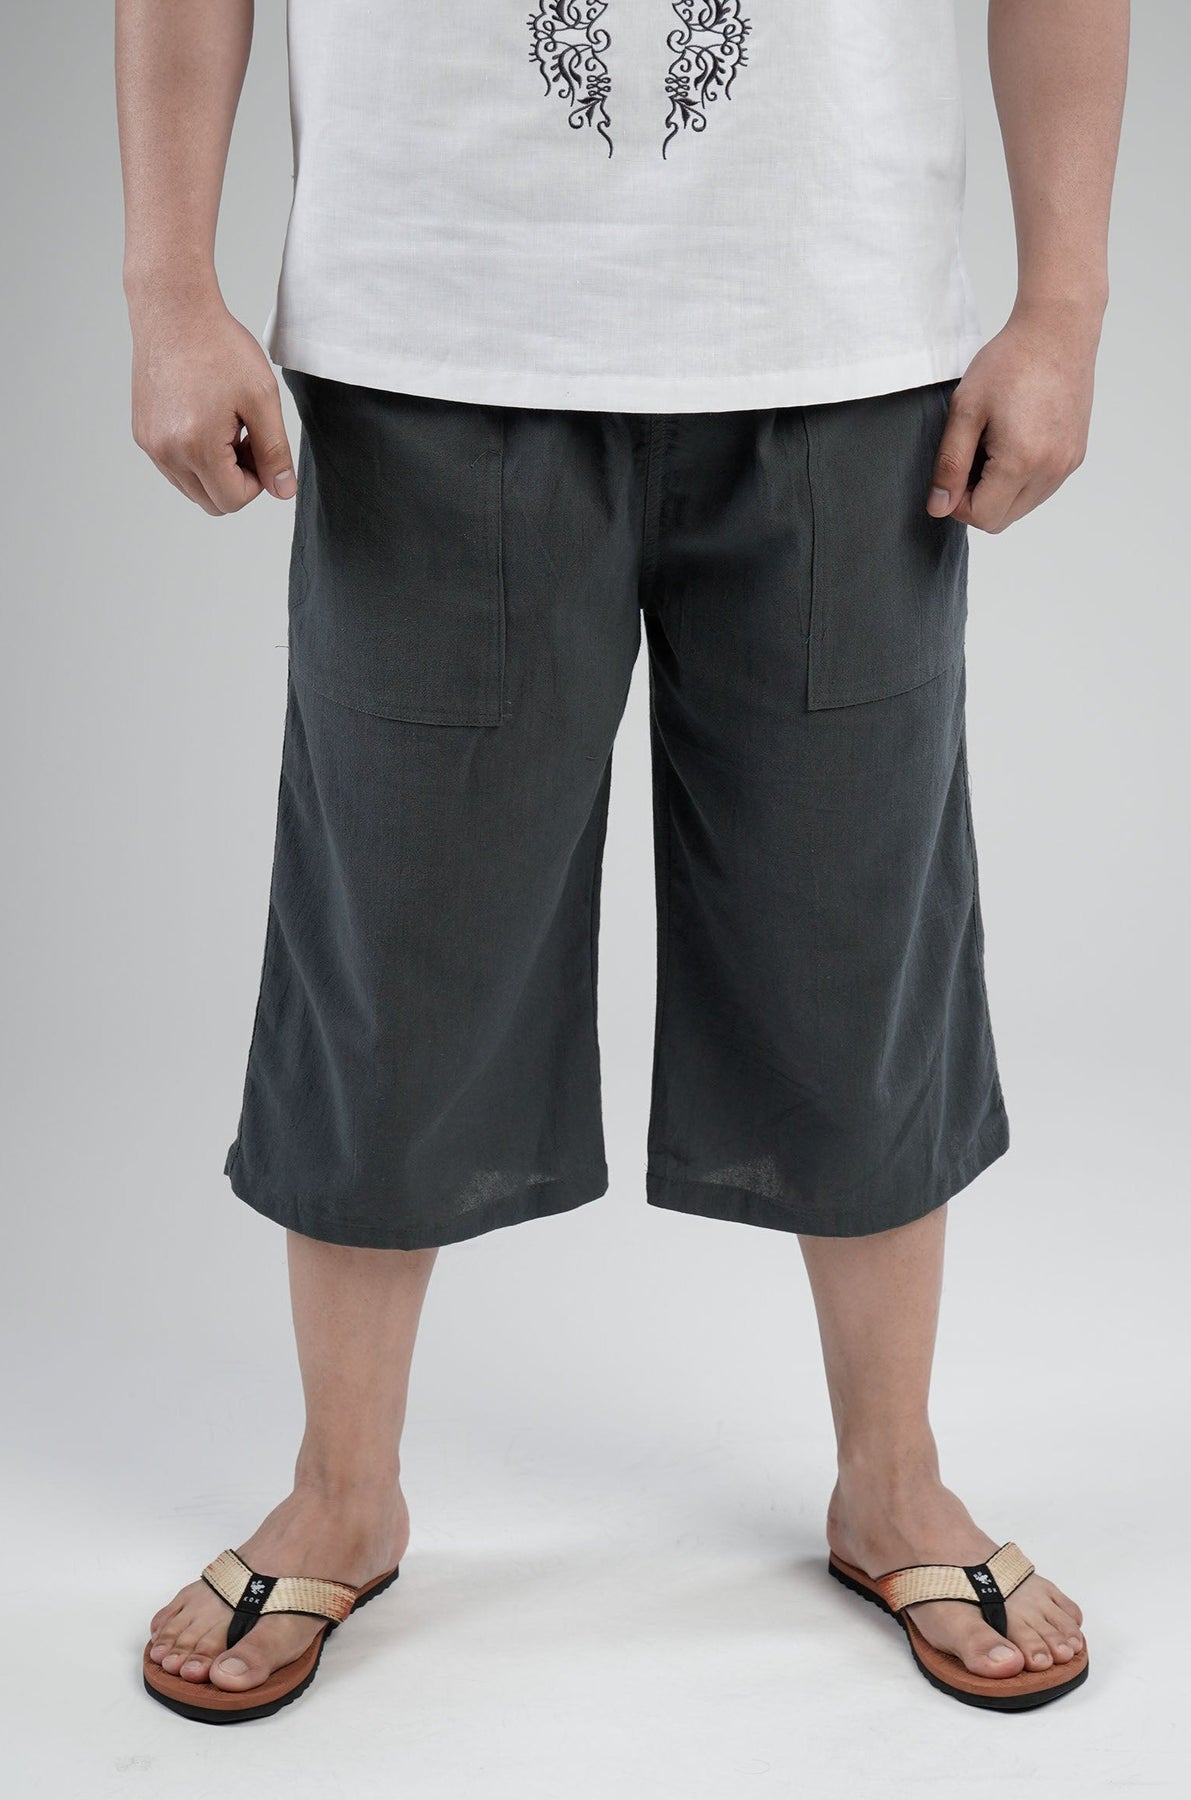 Capri Shorts - Buy Capri Shorts Online Starting at Just ₹167 | Meesho